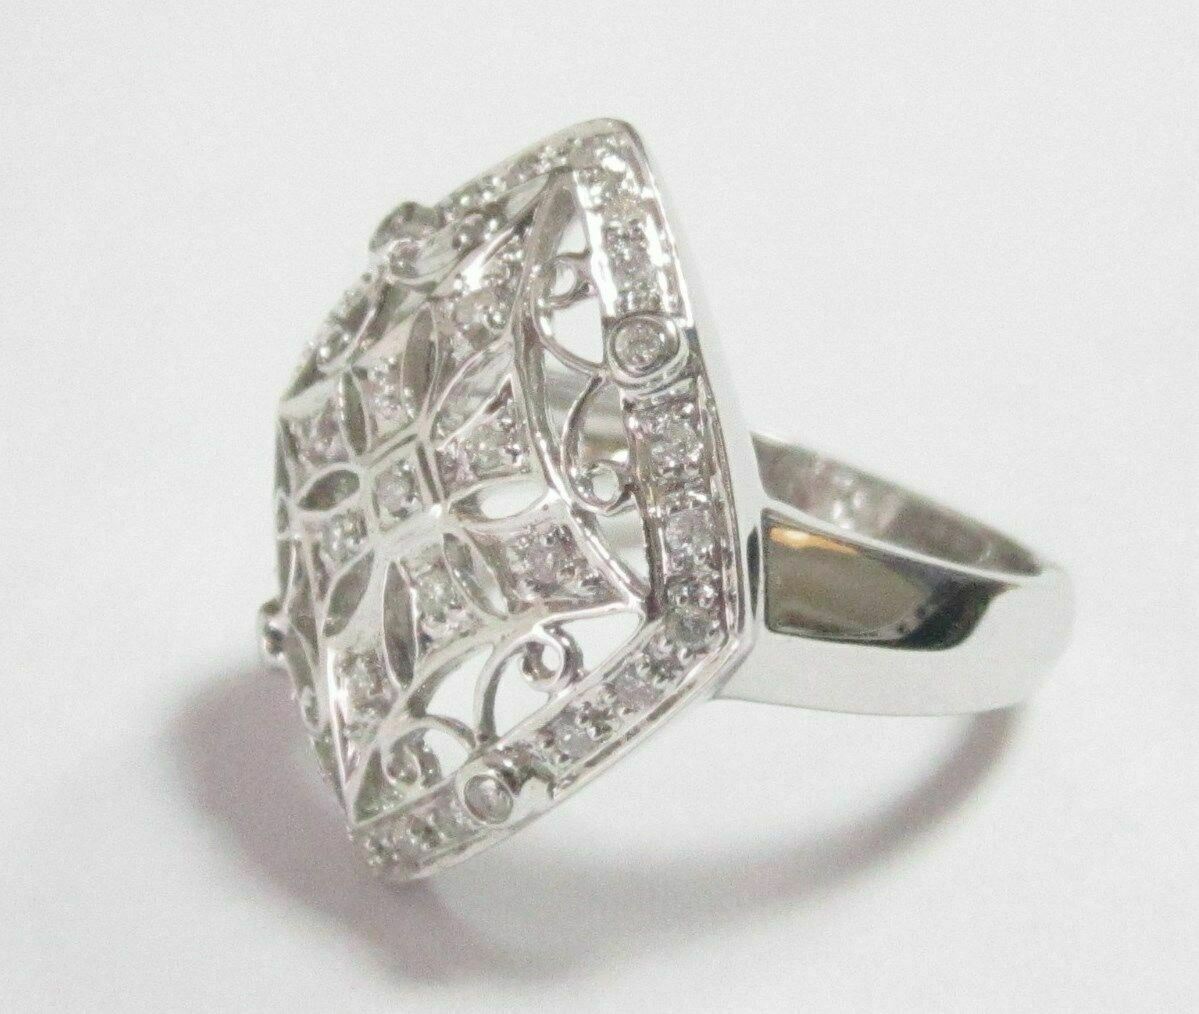 .50 TCW Art-Deco Round Cut Diamond Cocktail Ring Size 7 G SI1 14k White Gold